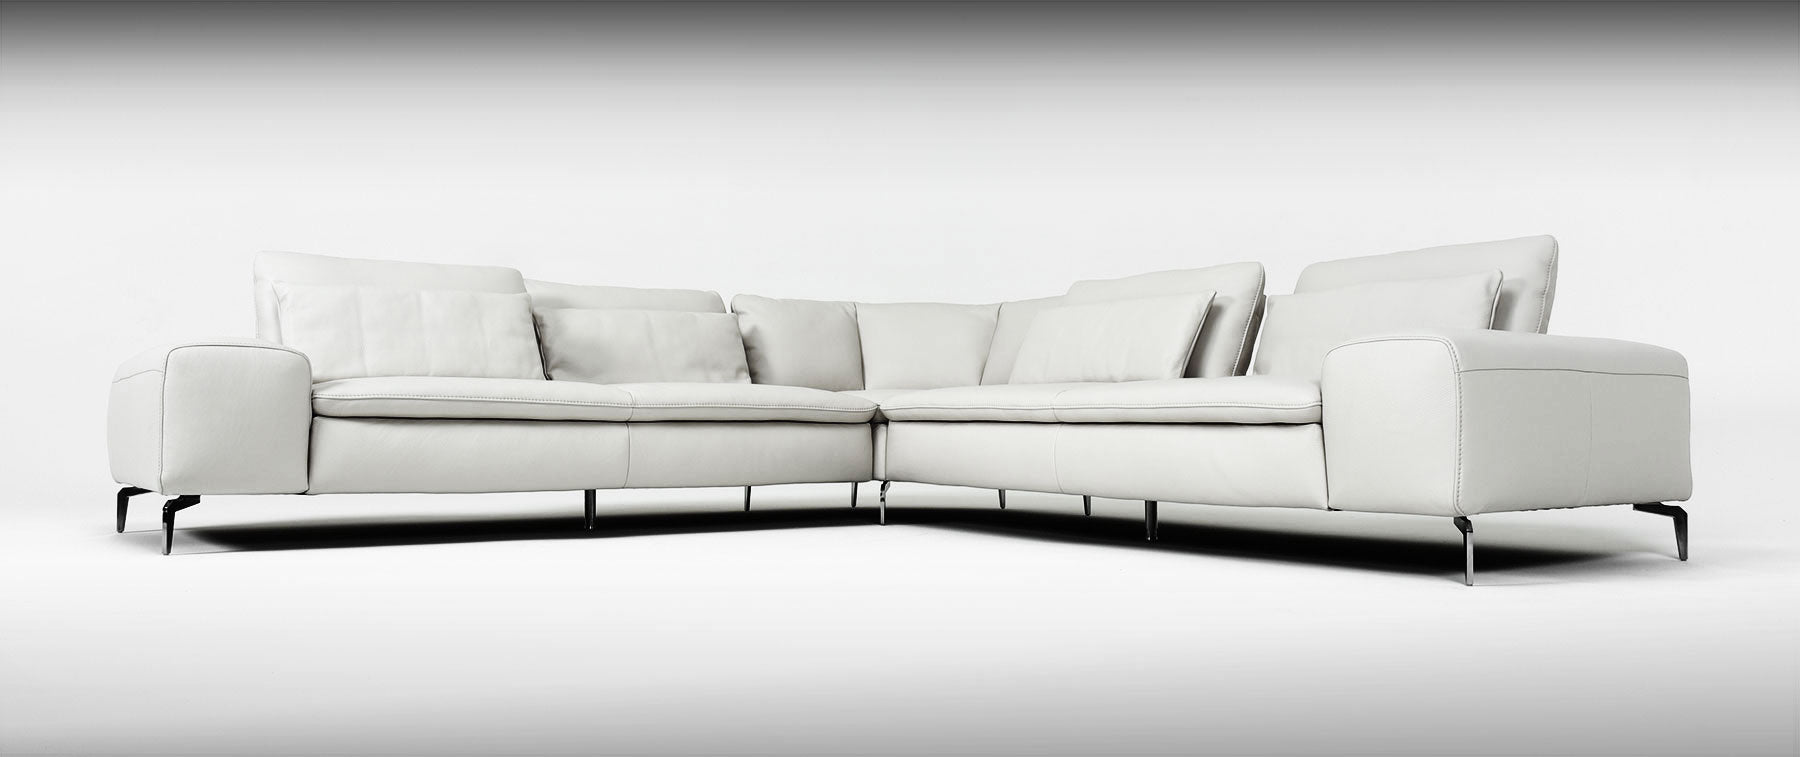 Scan Design Modern Contemporary Furniture Store